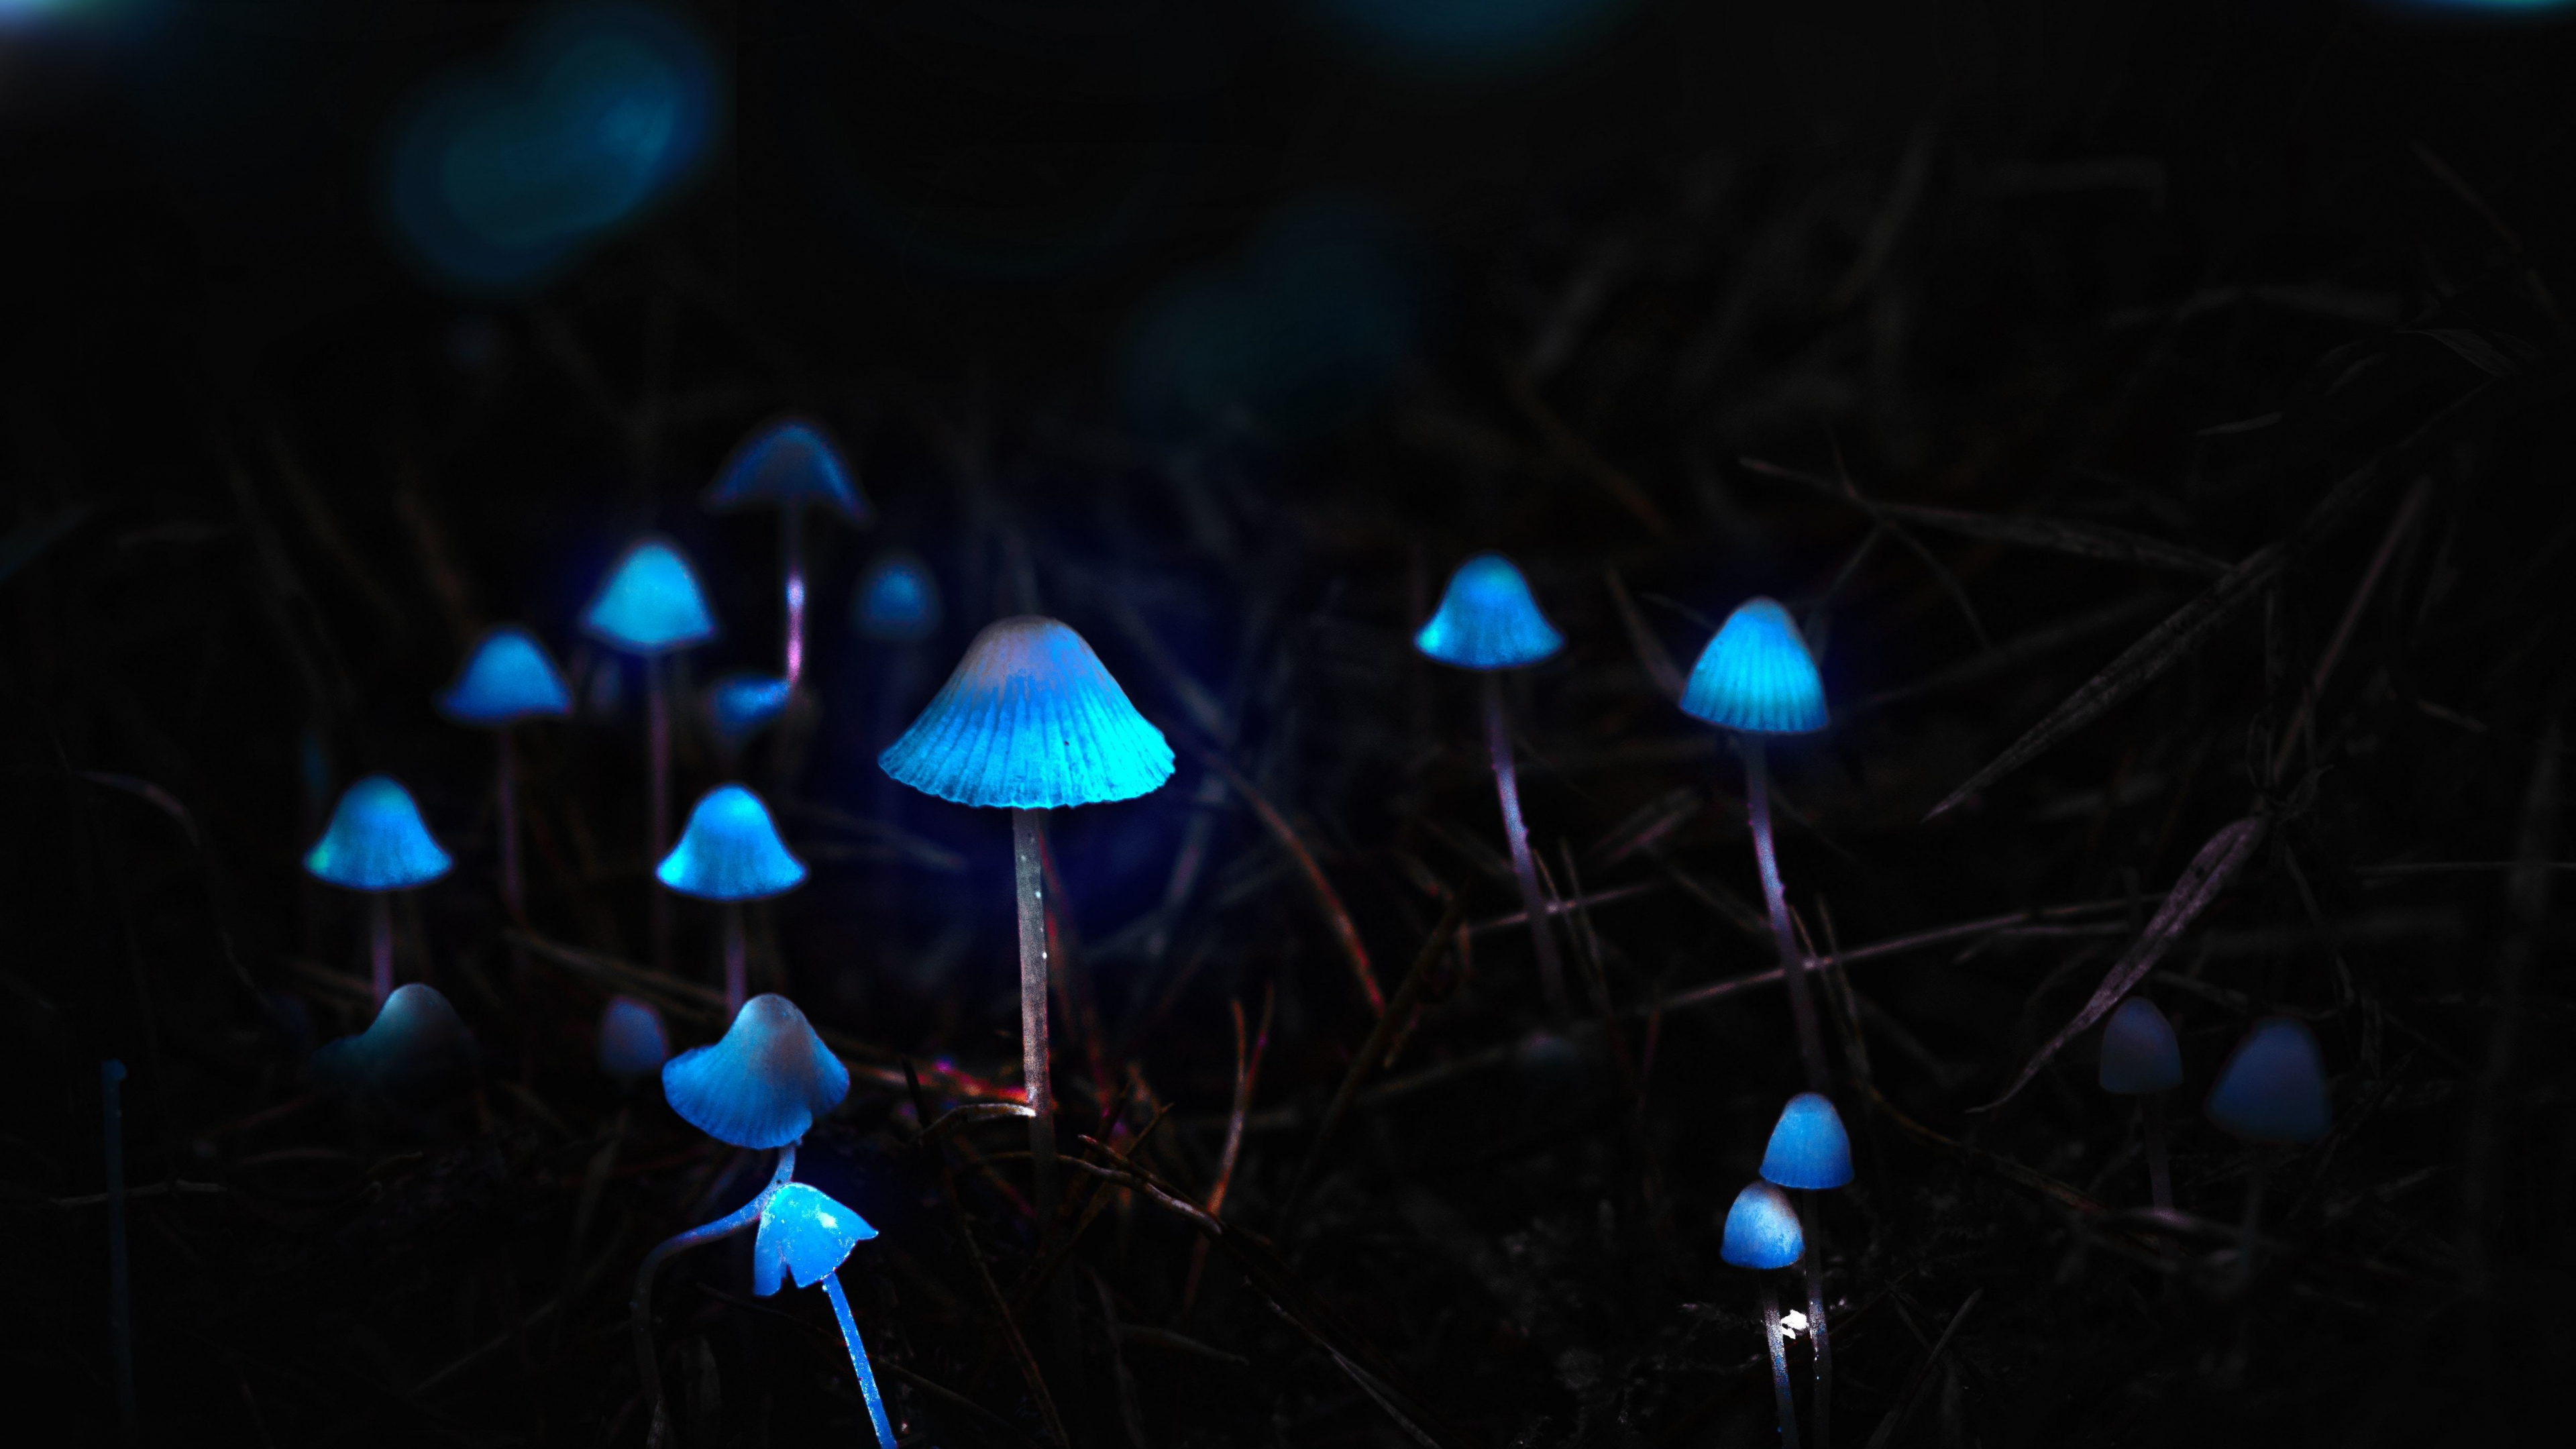 Download 3840x2160 mushrooms, toadstools, portrait, blue glow 4k wallpaper, uhd wallpaper, 16:9 widescreen wallpaper, 3840x2160 HD image, background, 18817